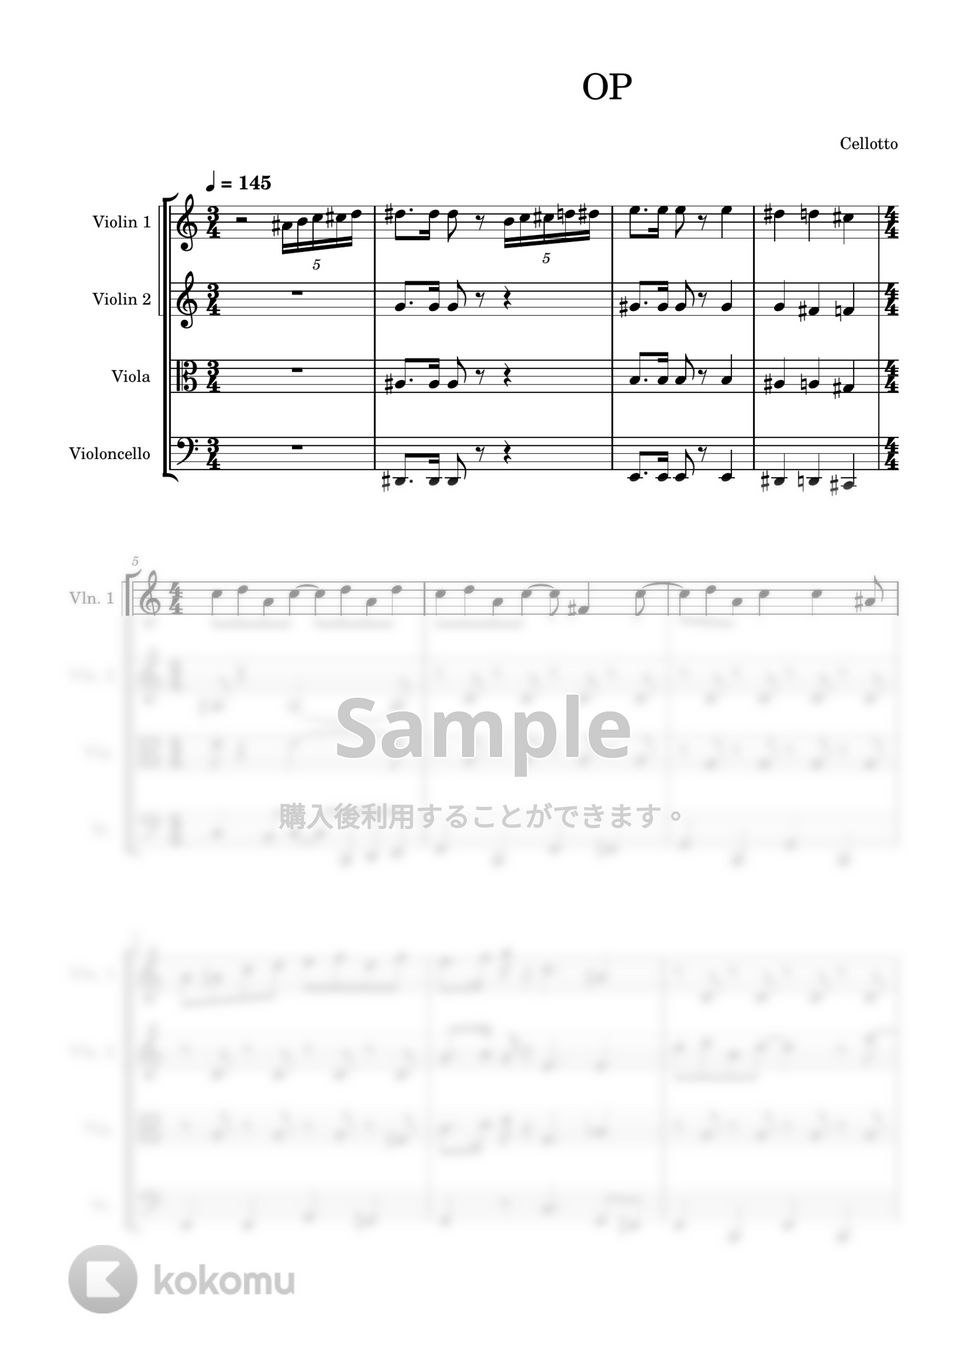 MANCINI HENRY NICOLA - トムとジェリーOP (弦楽四重奏) by Cellotto